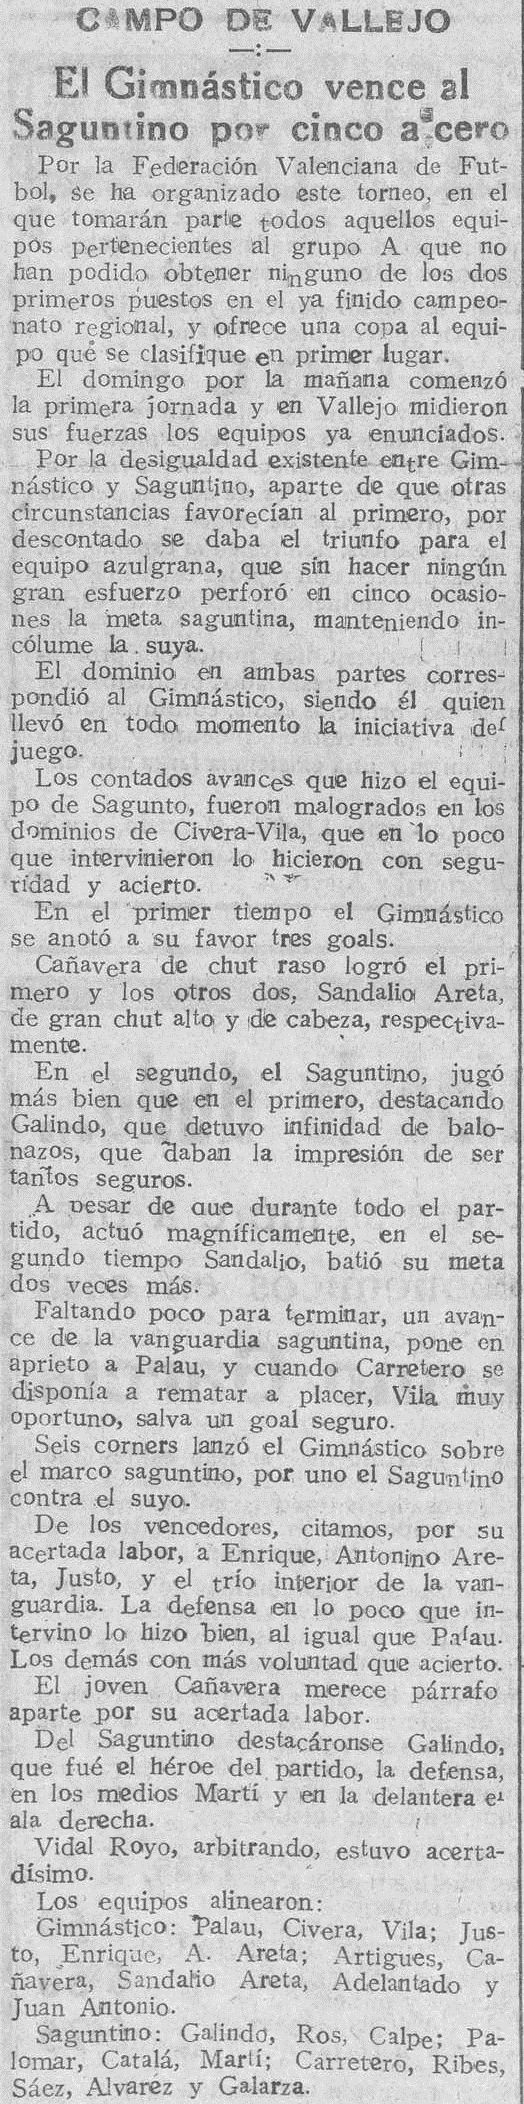 1928.02.12 (1 марта 1928), Гимнастико - Атлетик Сагунтино, 5-0.png